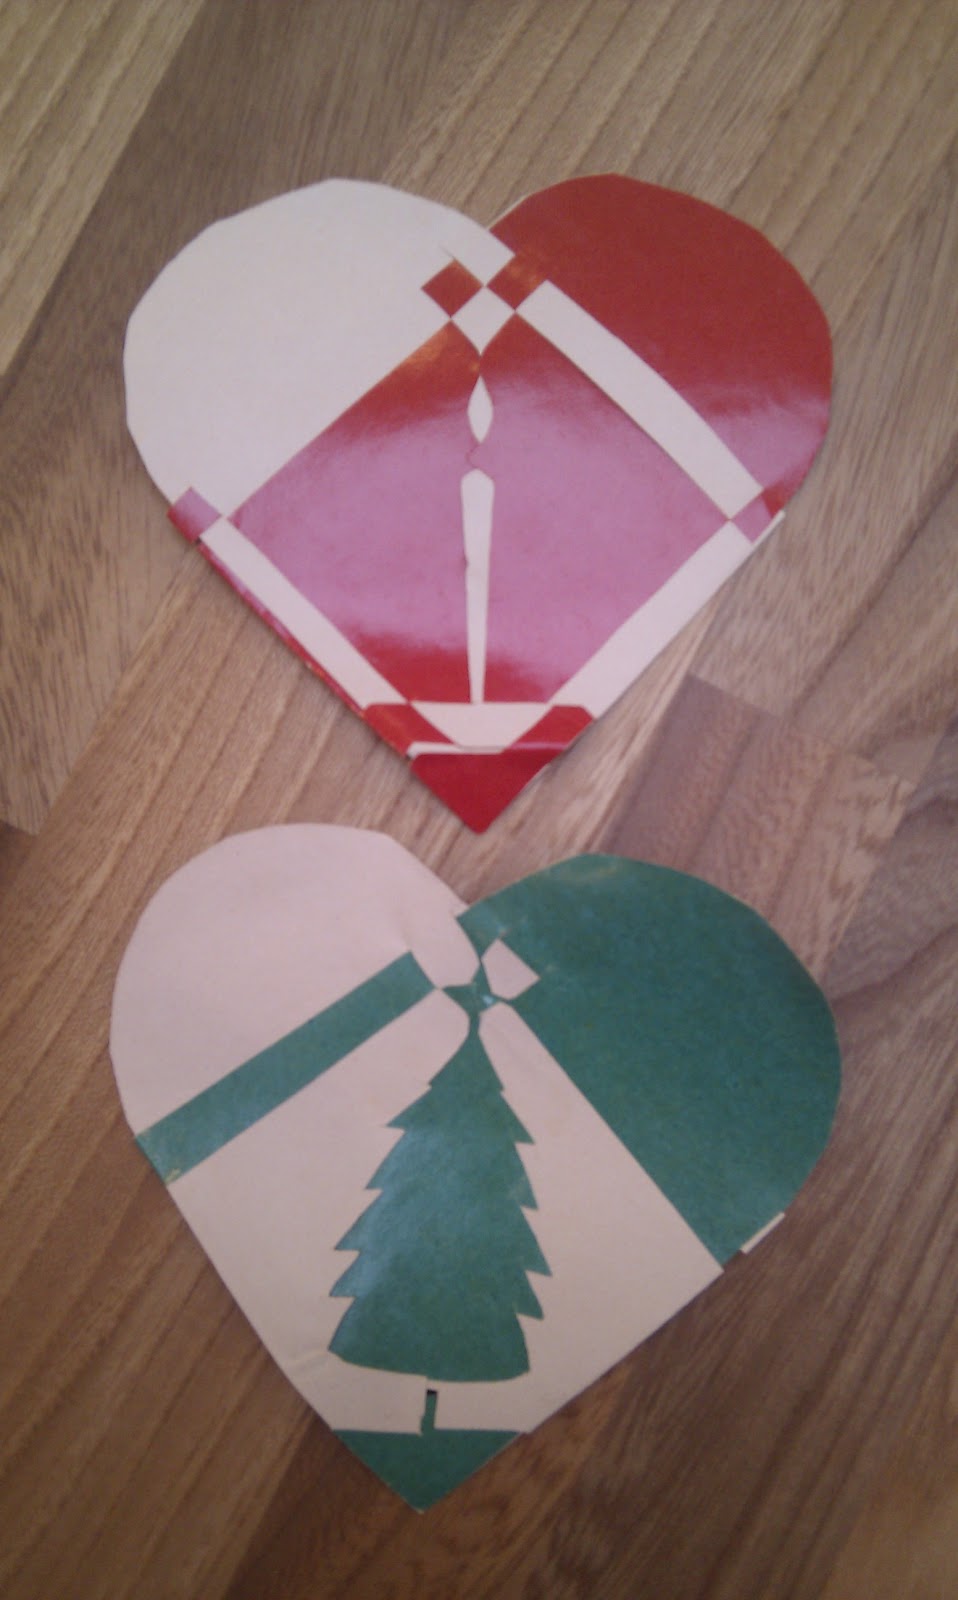 I 'Heart' Danish Christmas!